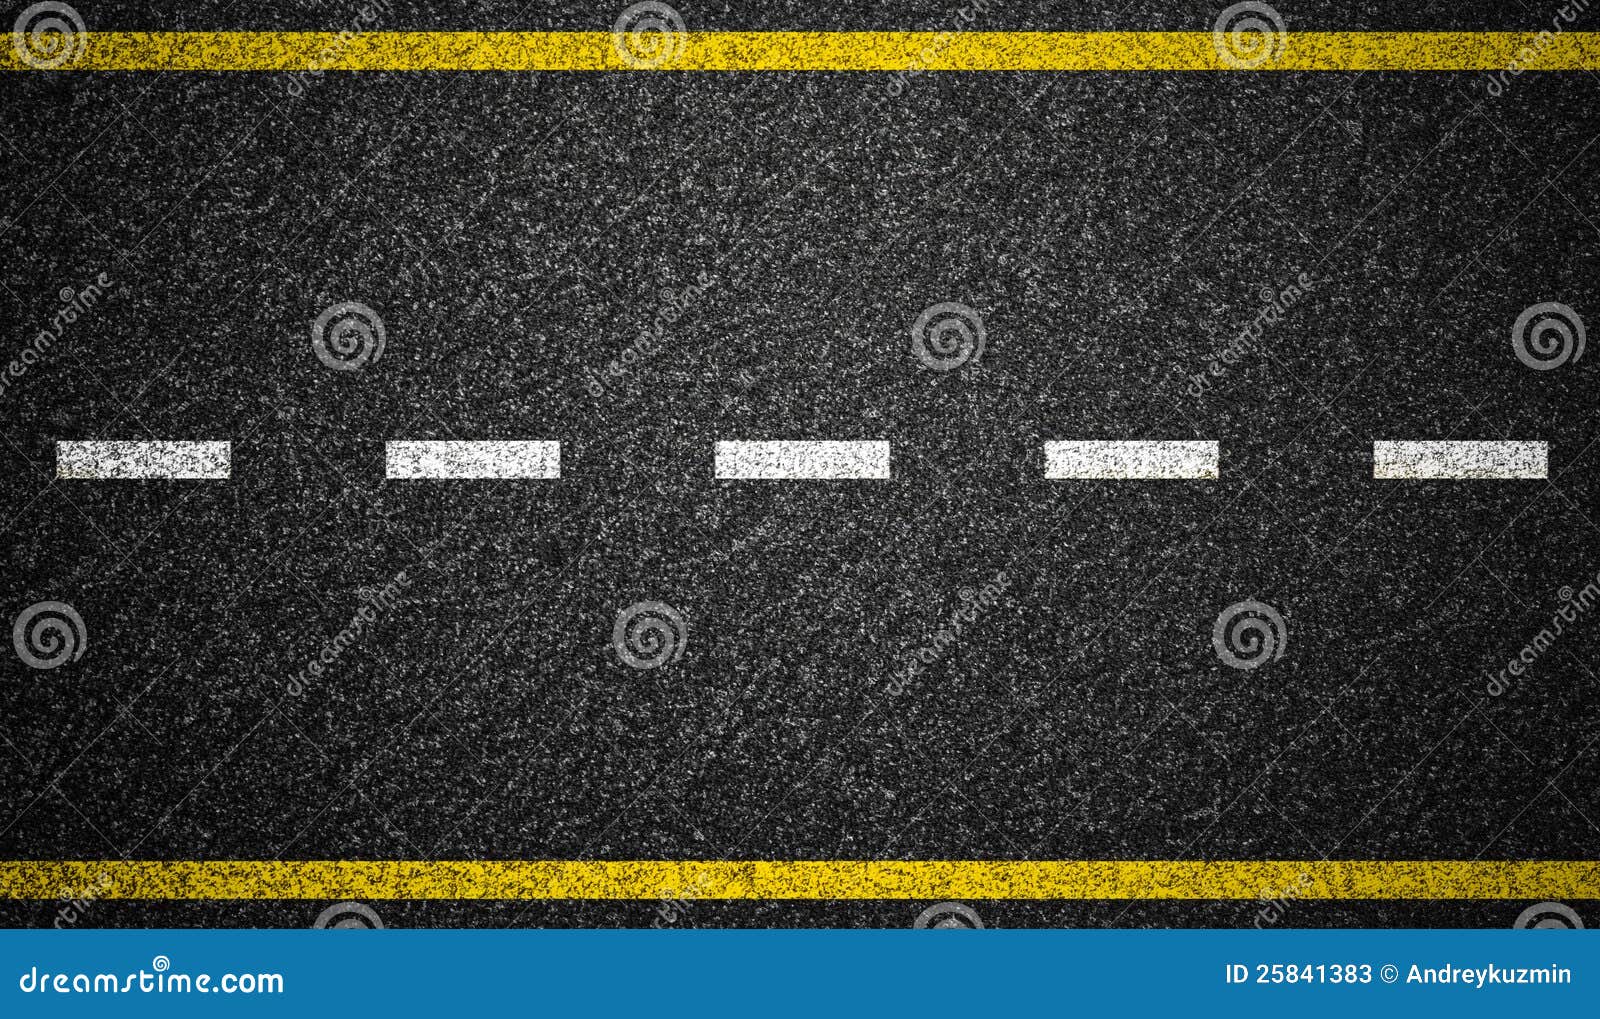 asphalt road markings background